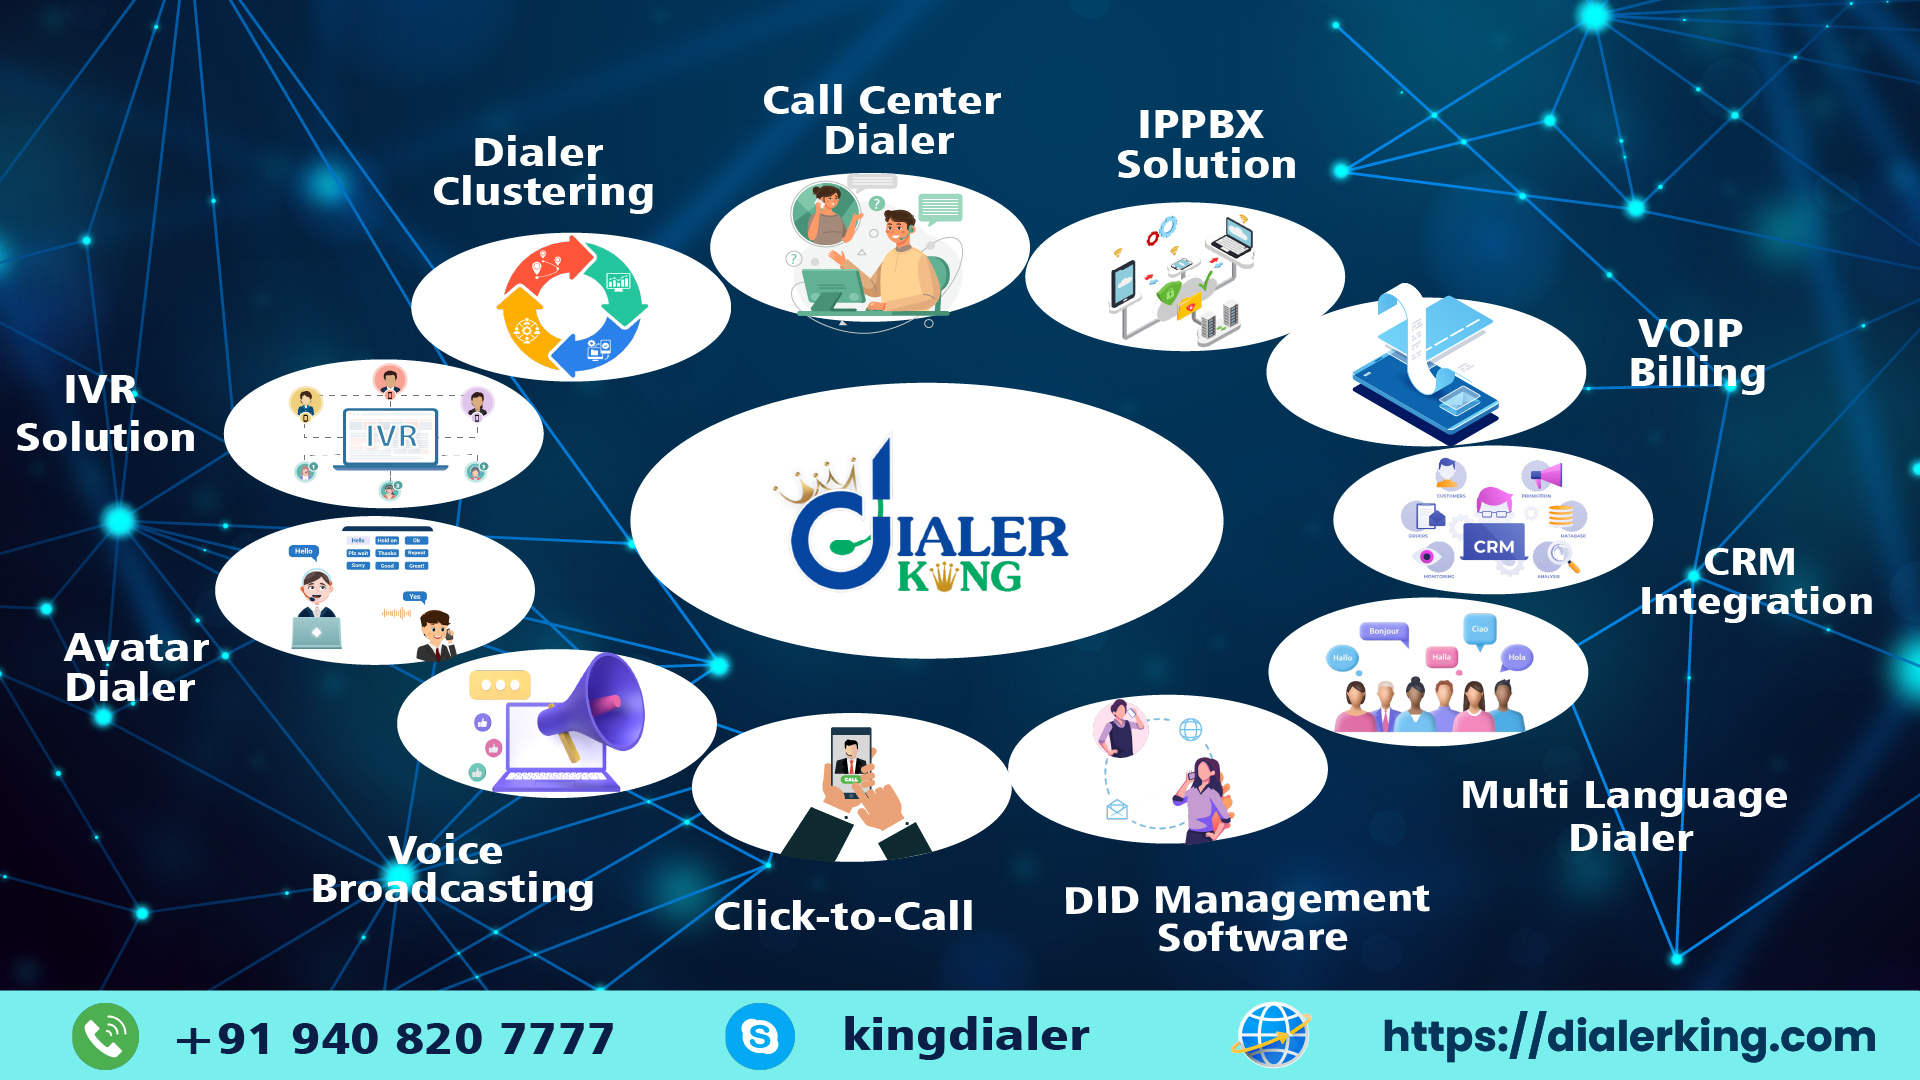 Call Center
Dialer Dialer

Clustering

IPPBX < 4

Solution «

VOIP
IVR Billing

Solution

.
+CRM
. { Integration

Avatar. a
Dialer .

Multi Language
Dialer

oice ,
- Broadcasting . DID Management
>< Click-to-Call Software

(9 +919408207777 (©) kingdialer ;  https://dialerking.com